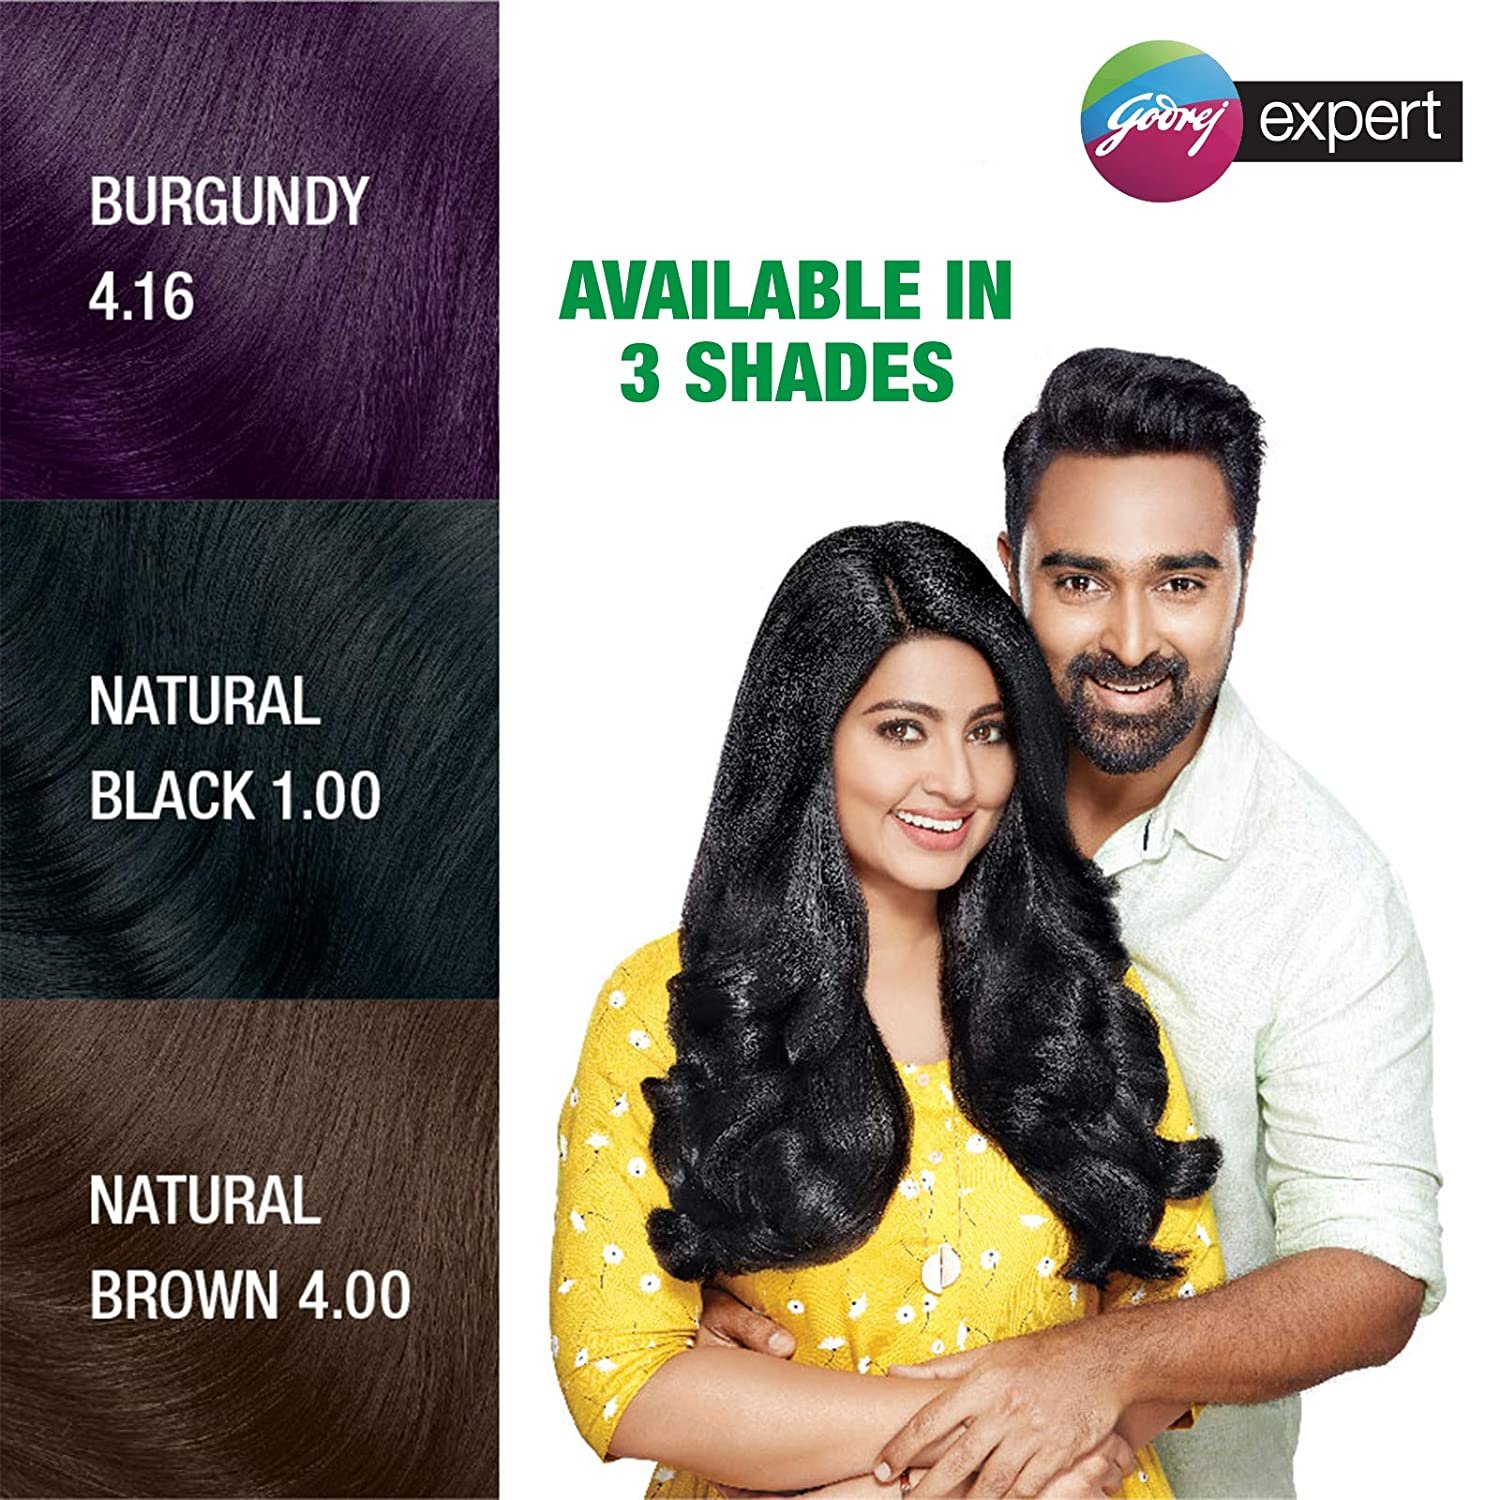 Actor Couple Sneha  Prasanna stars in a digital film by Godrej Expert for  Easy Shampoo Hair Colour